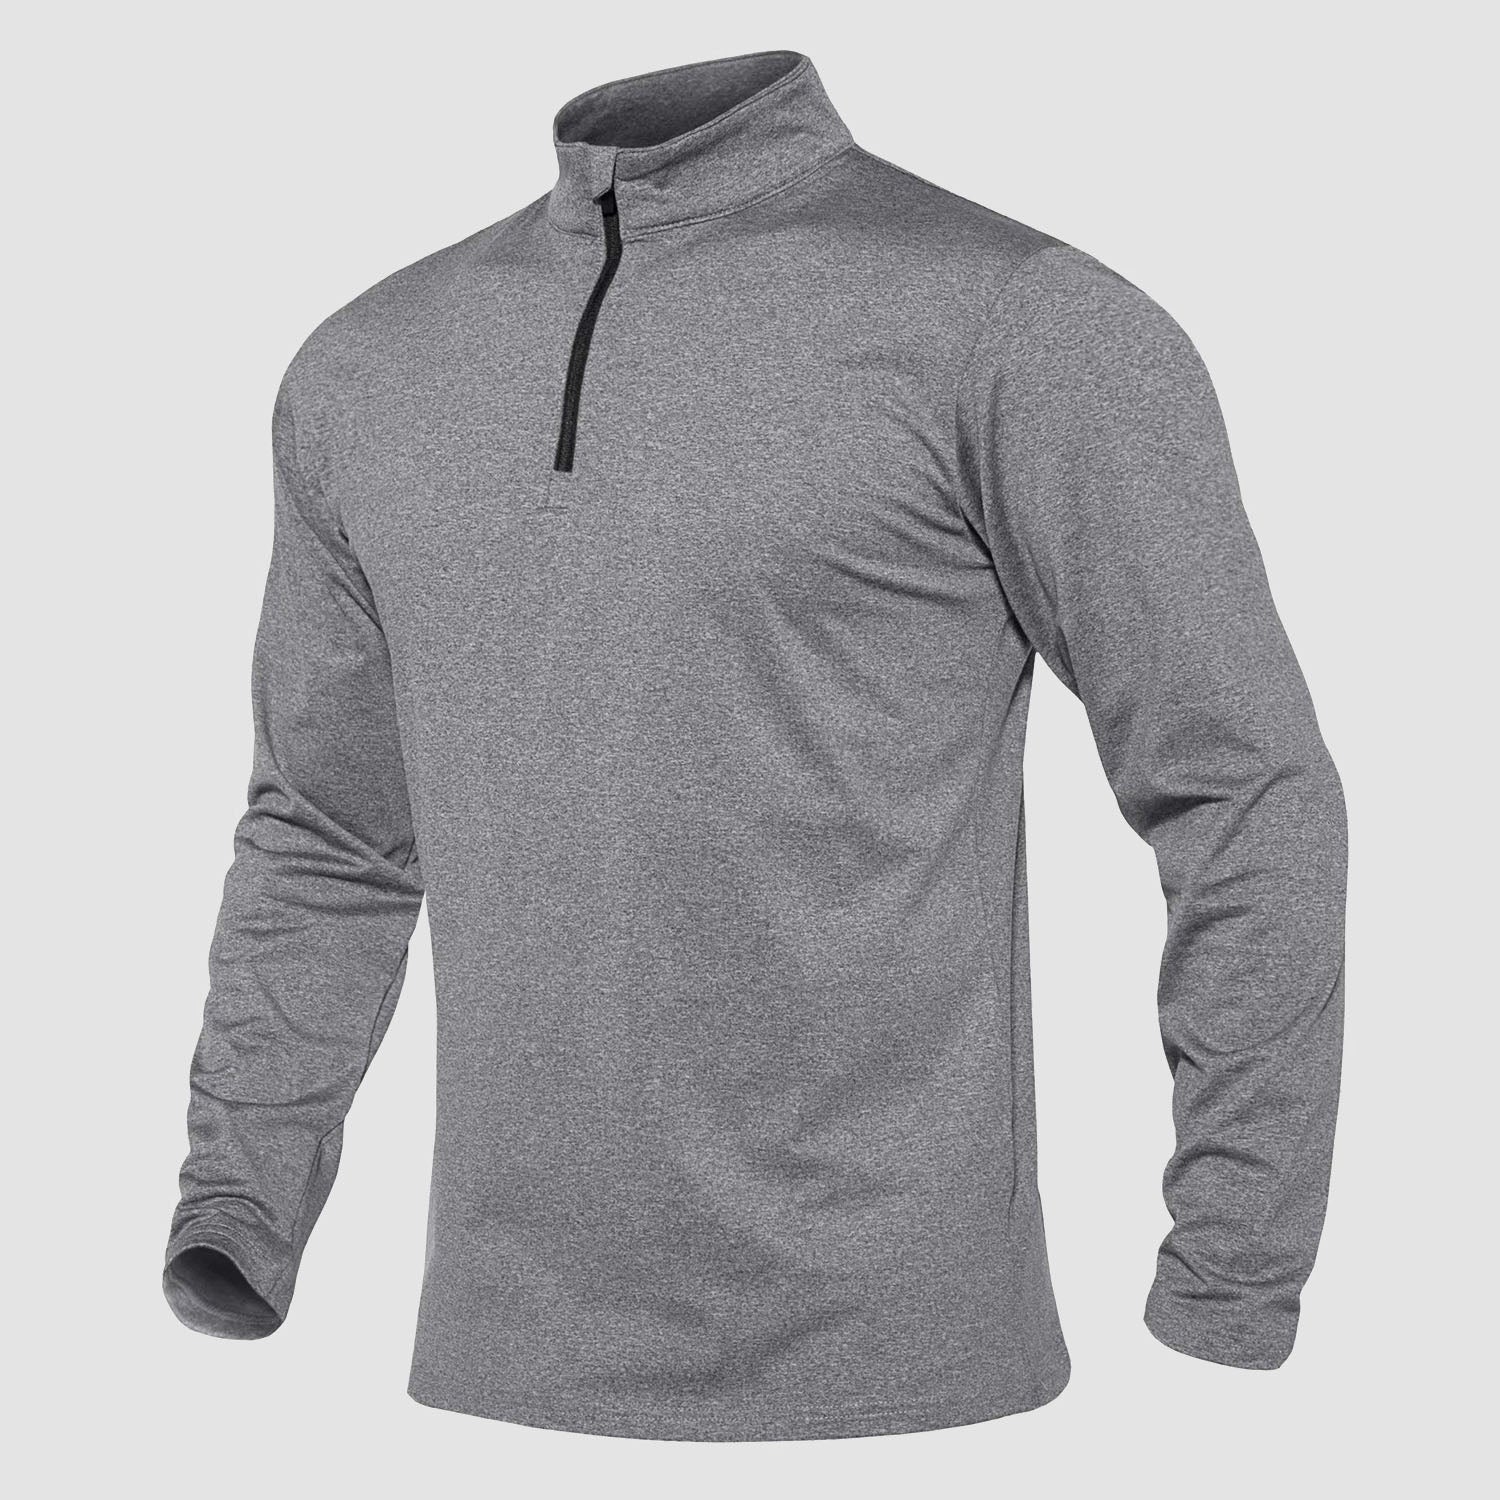 Men's Athletic Shirt 1/4 Zip Fleece Long Sleeve Sweatshirts